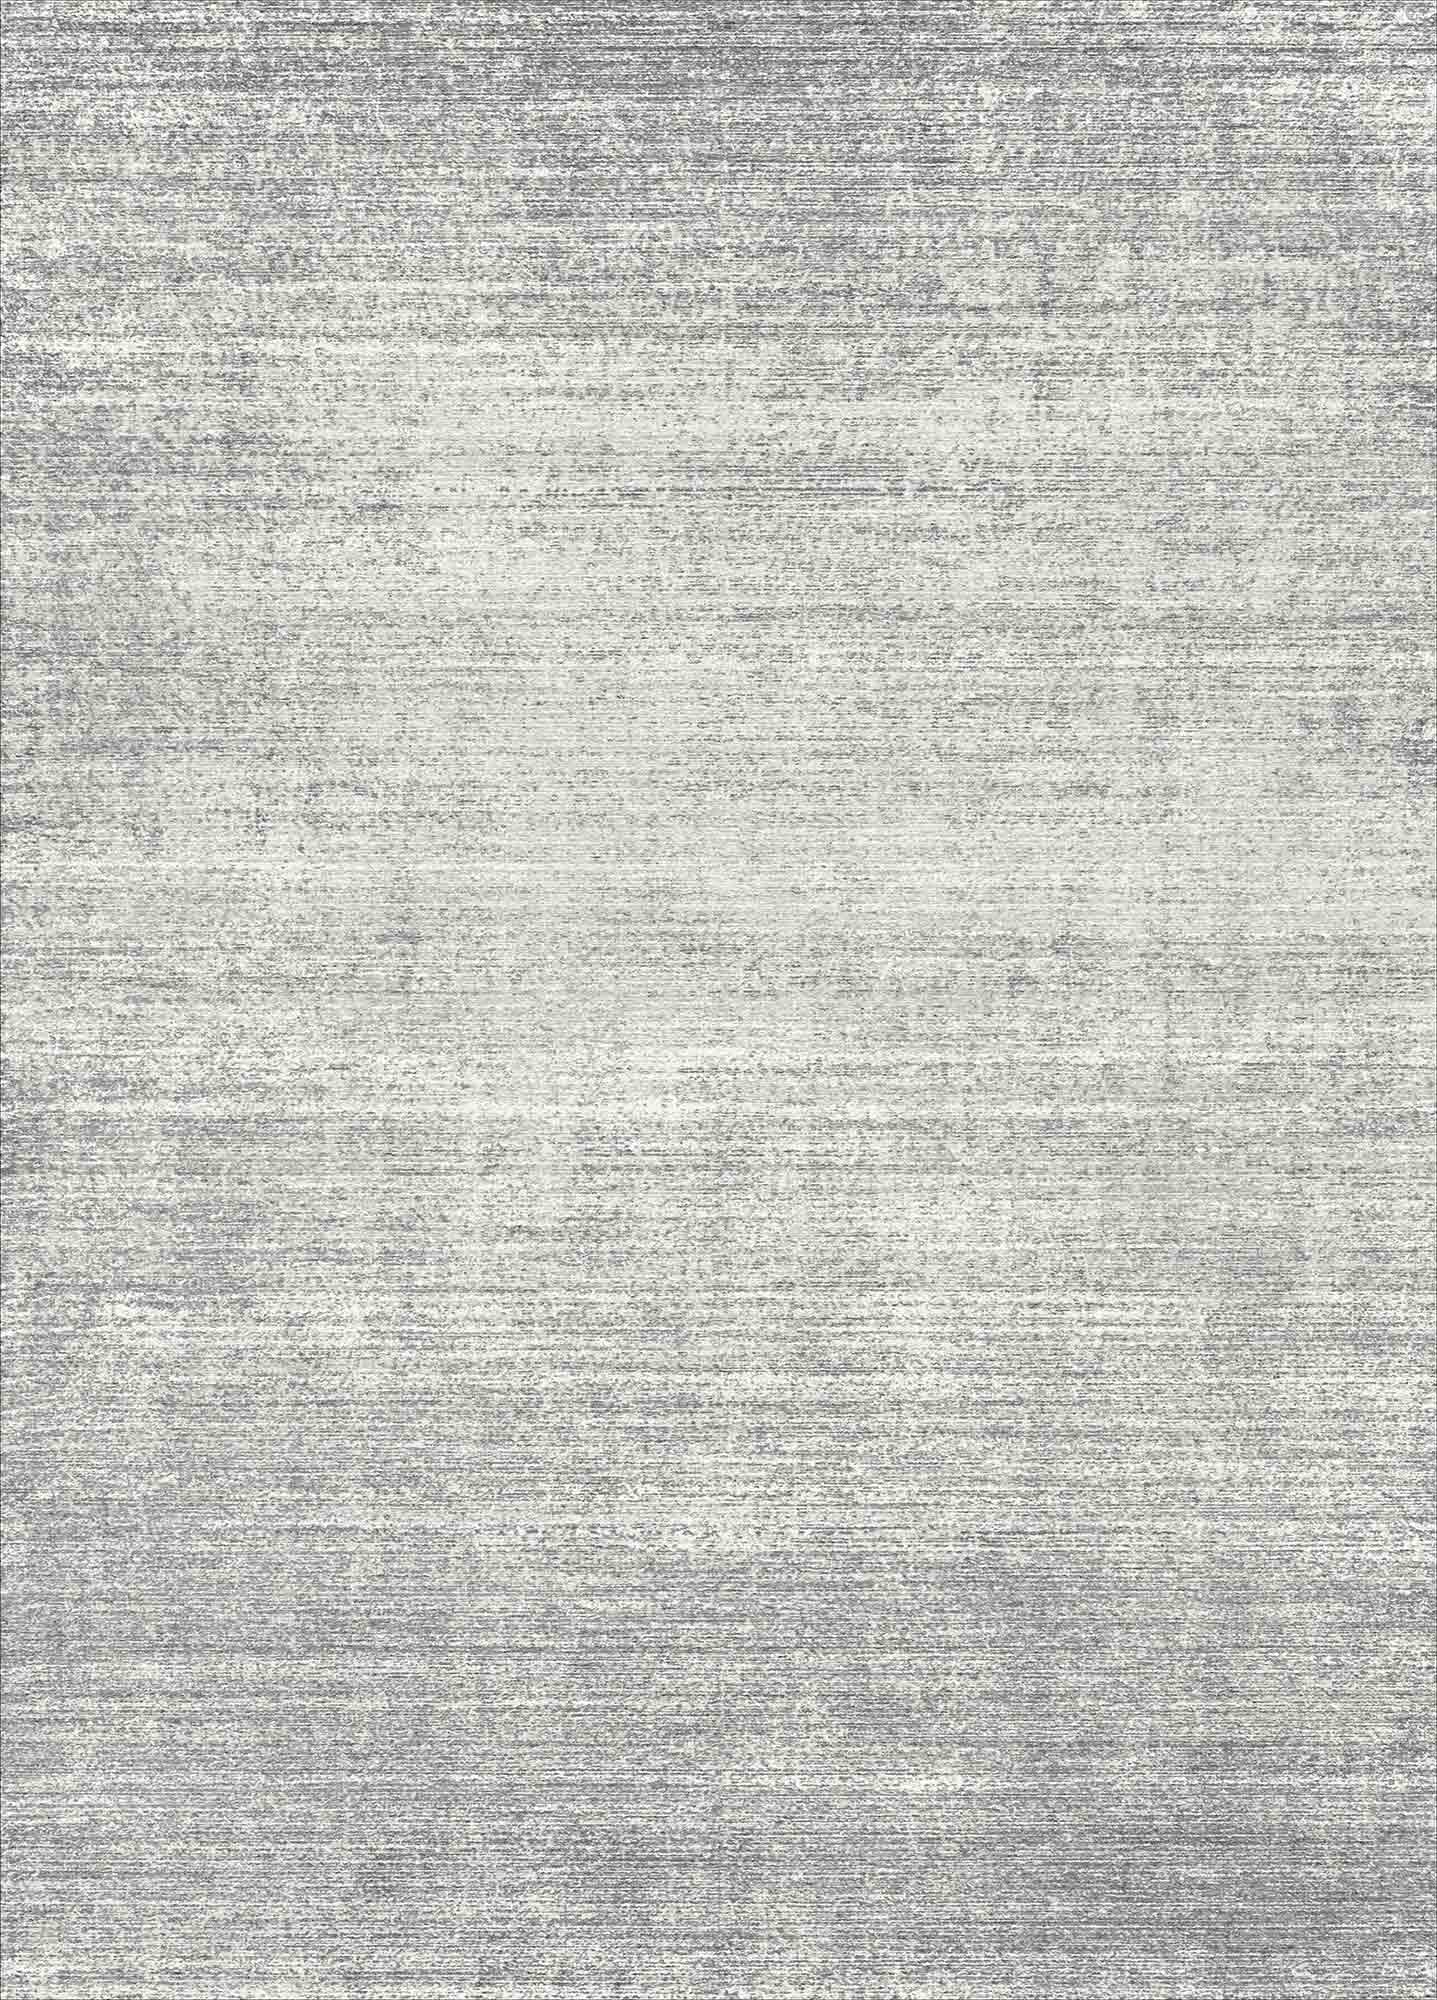 ComiComi Living Room Area Rugs PureEase Grey